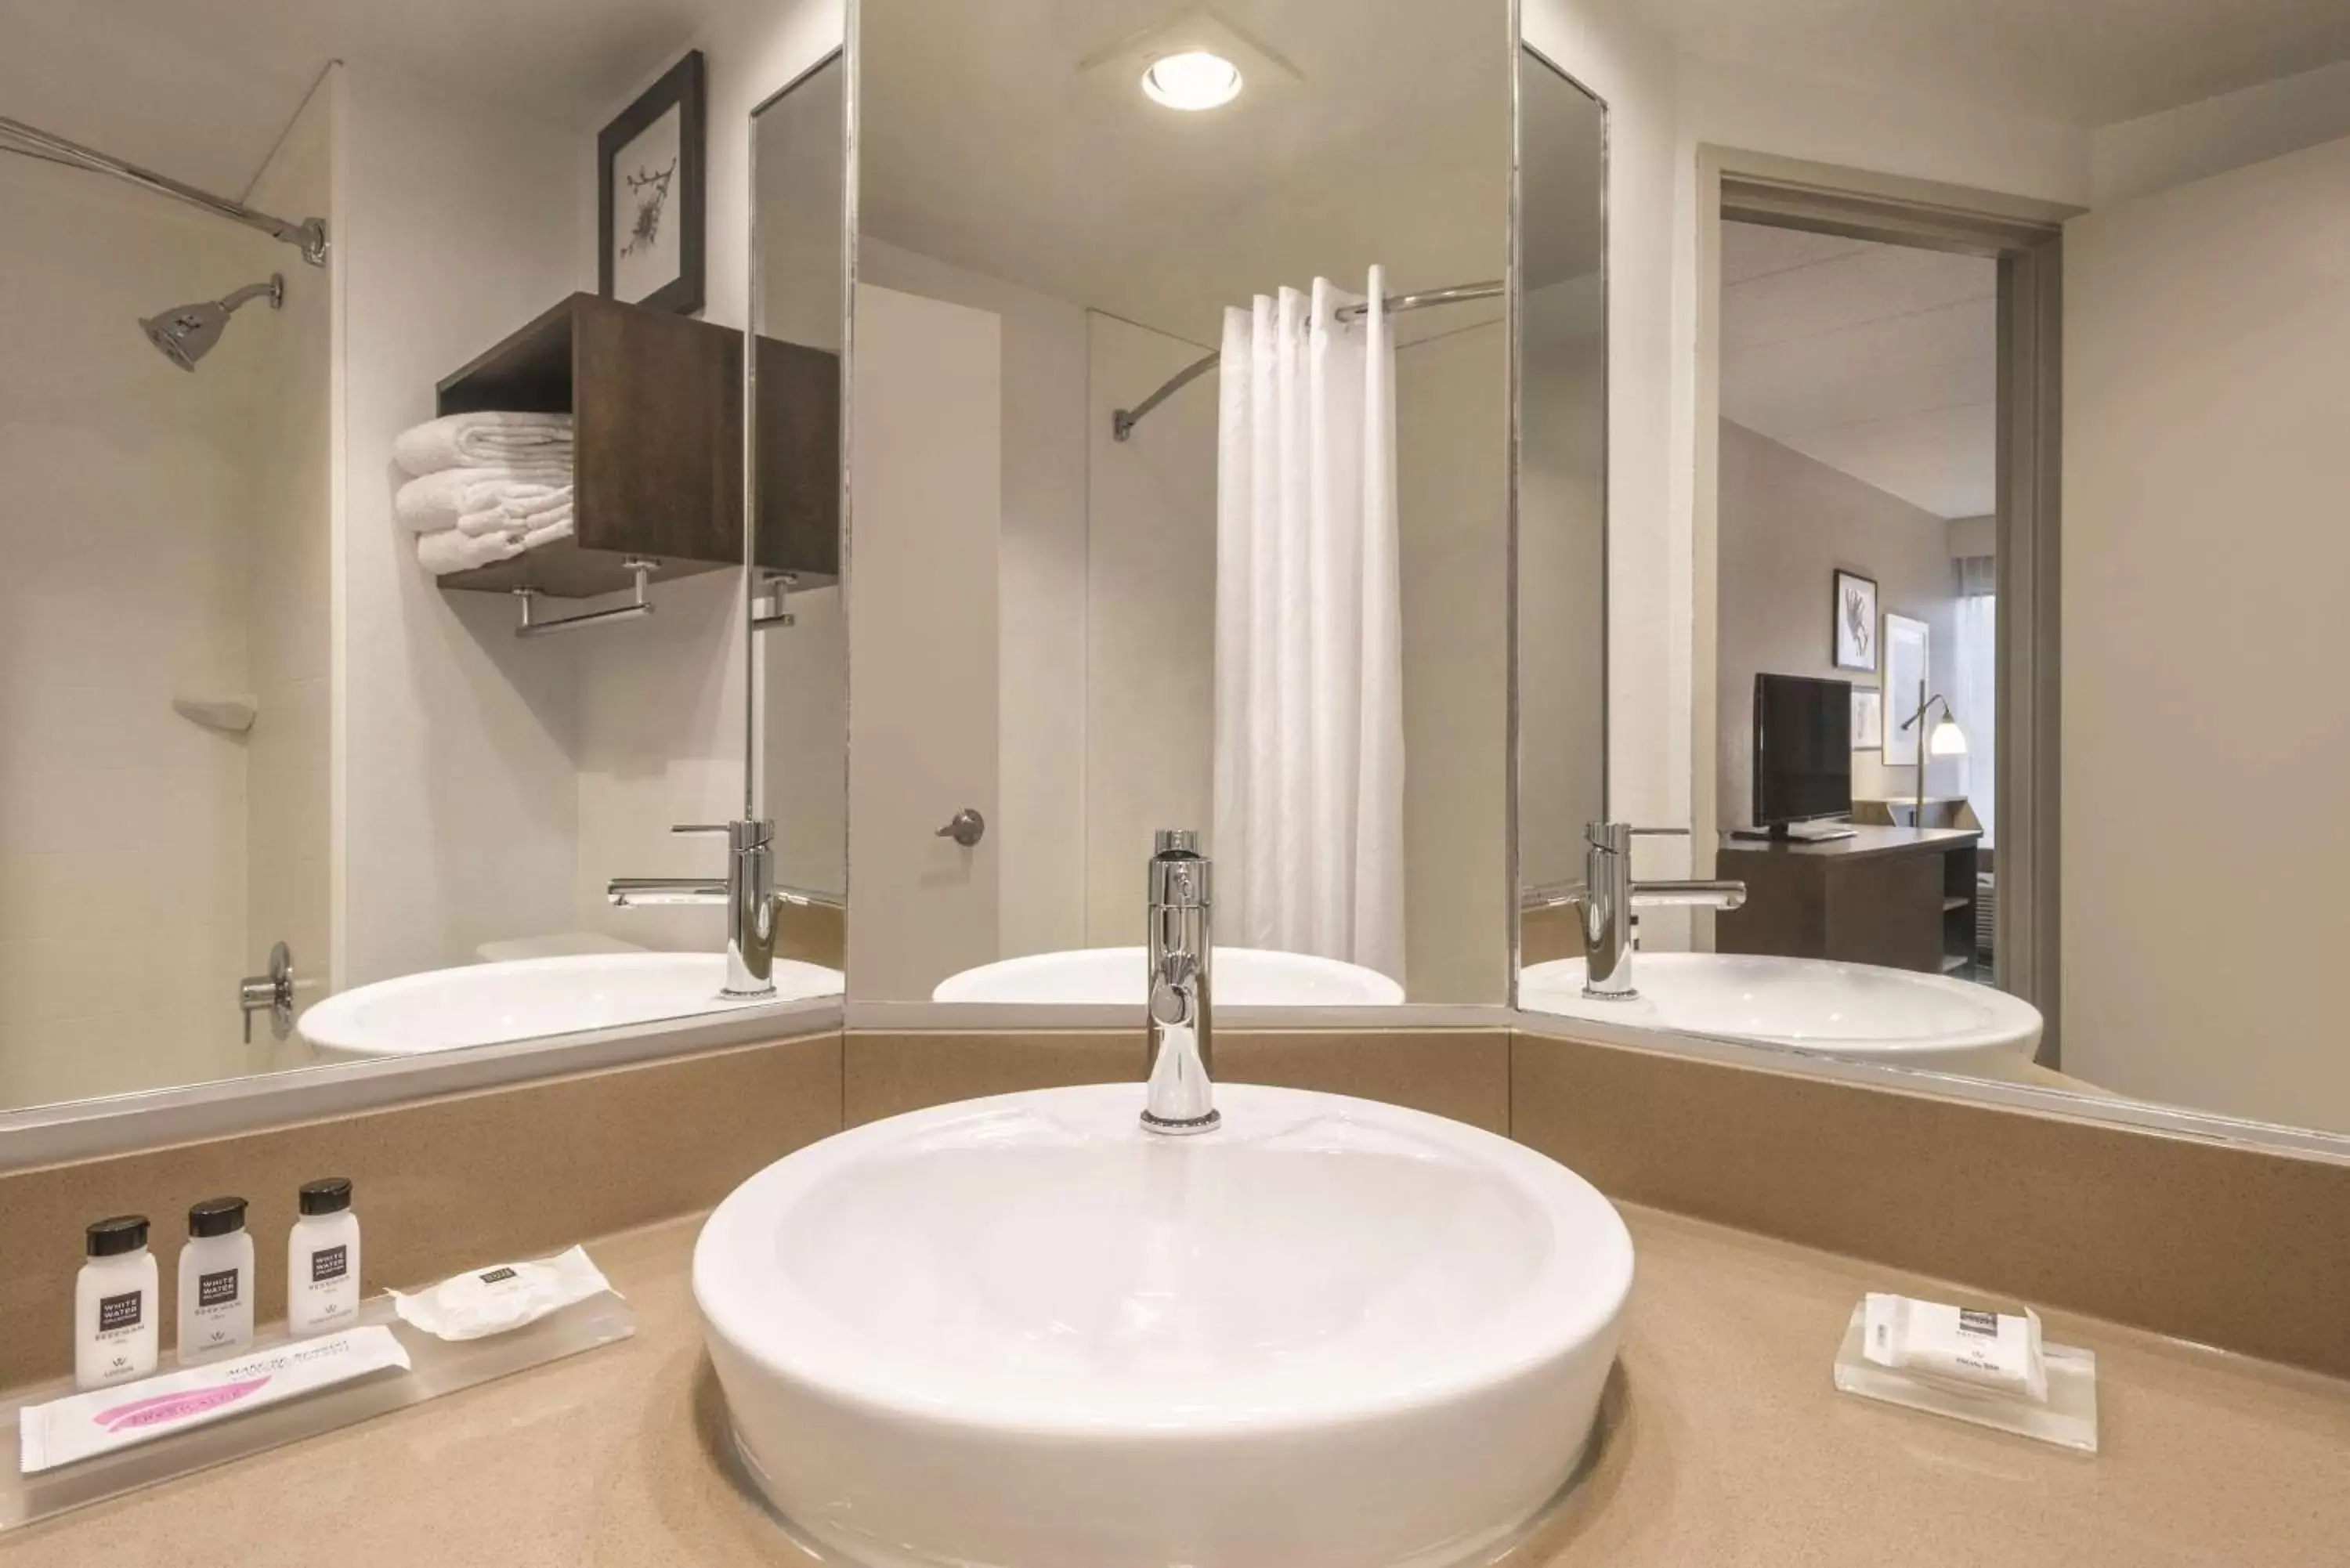 Bathroom in Country Inn & Suites by Radisson, La Crosse, WI